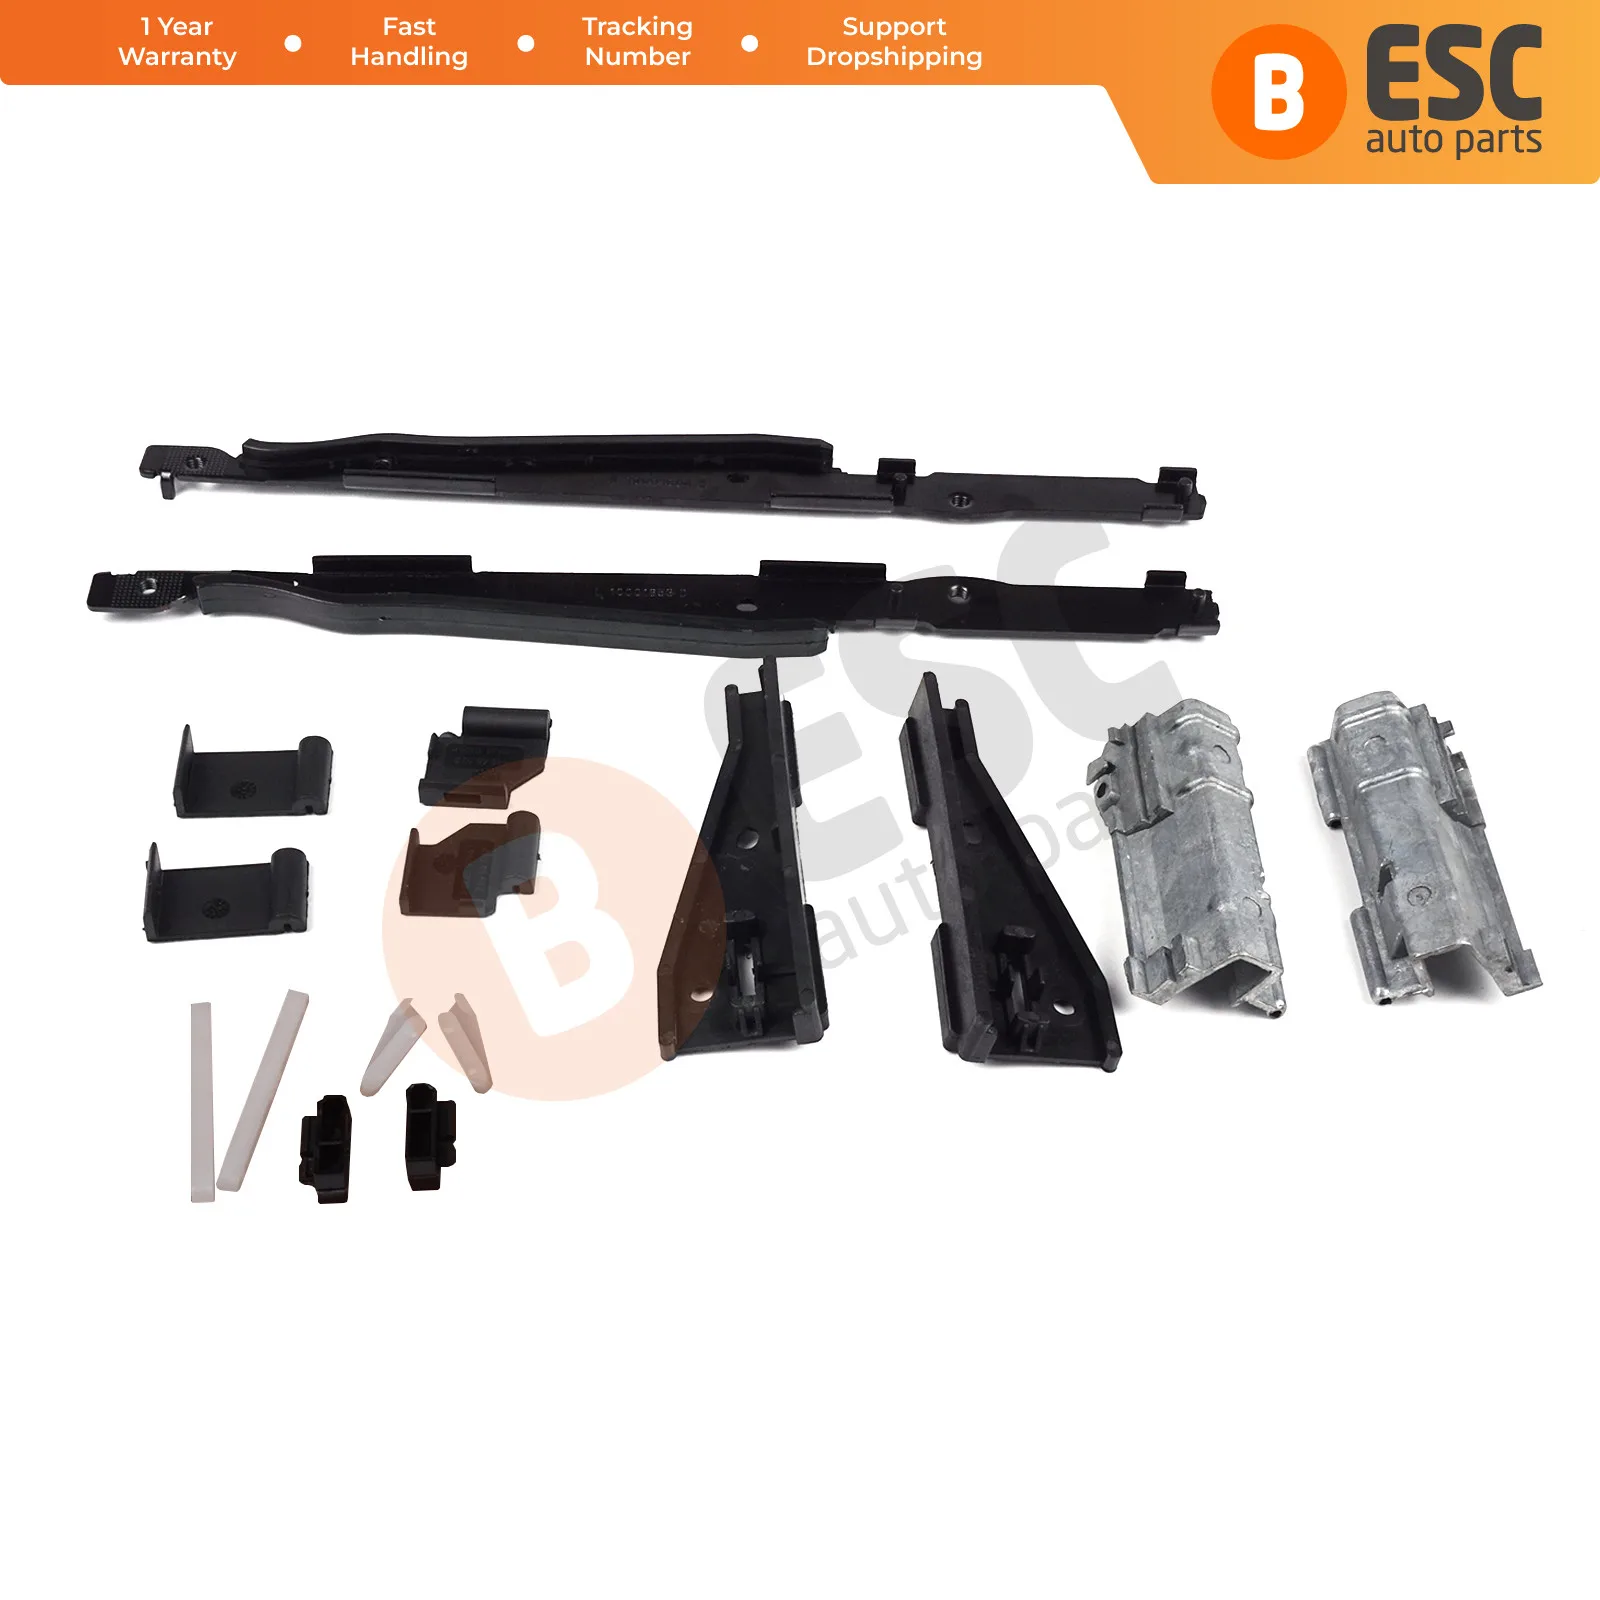 

ESC Auto Parts ESR40+ESR530 16 Pieces Sunroof Repair Kit for BMW X5 E53 and X3 E83 2000-2006 Fast Shipment Ship From Turkey